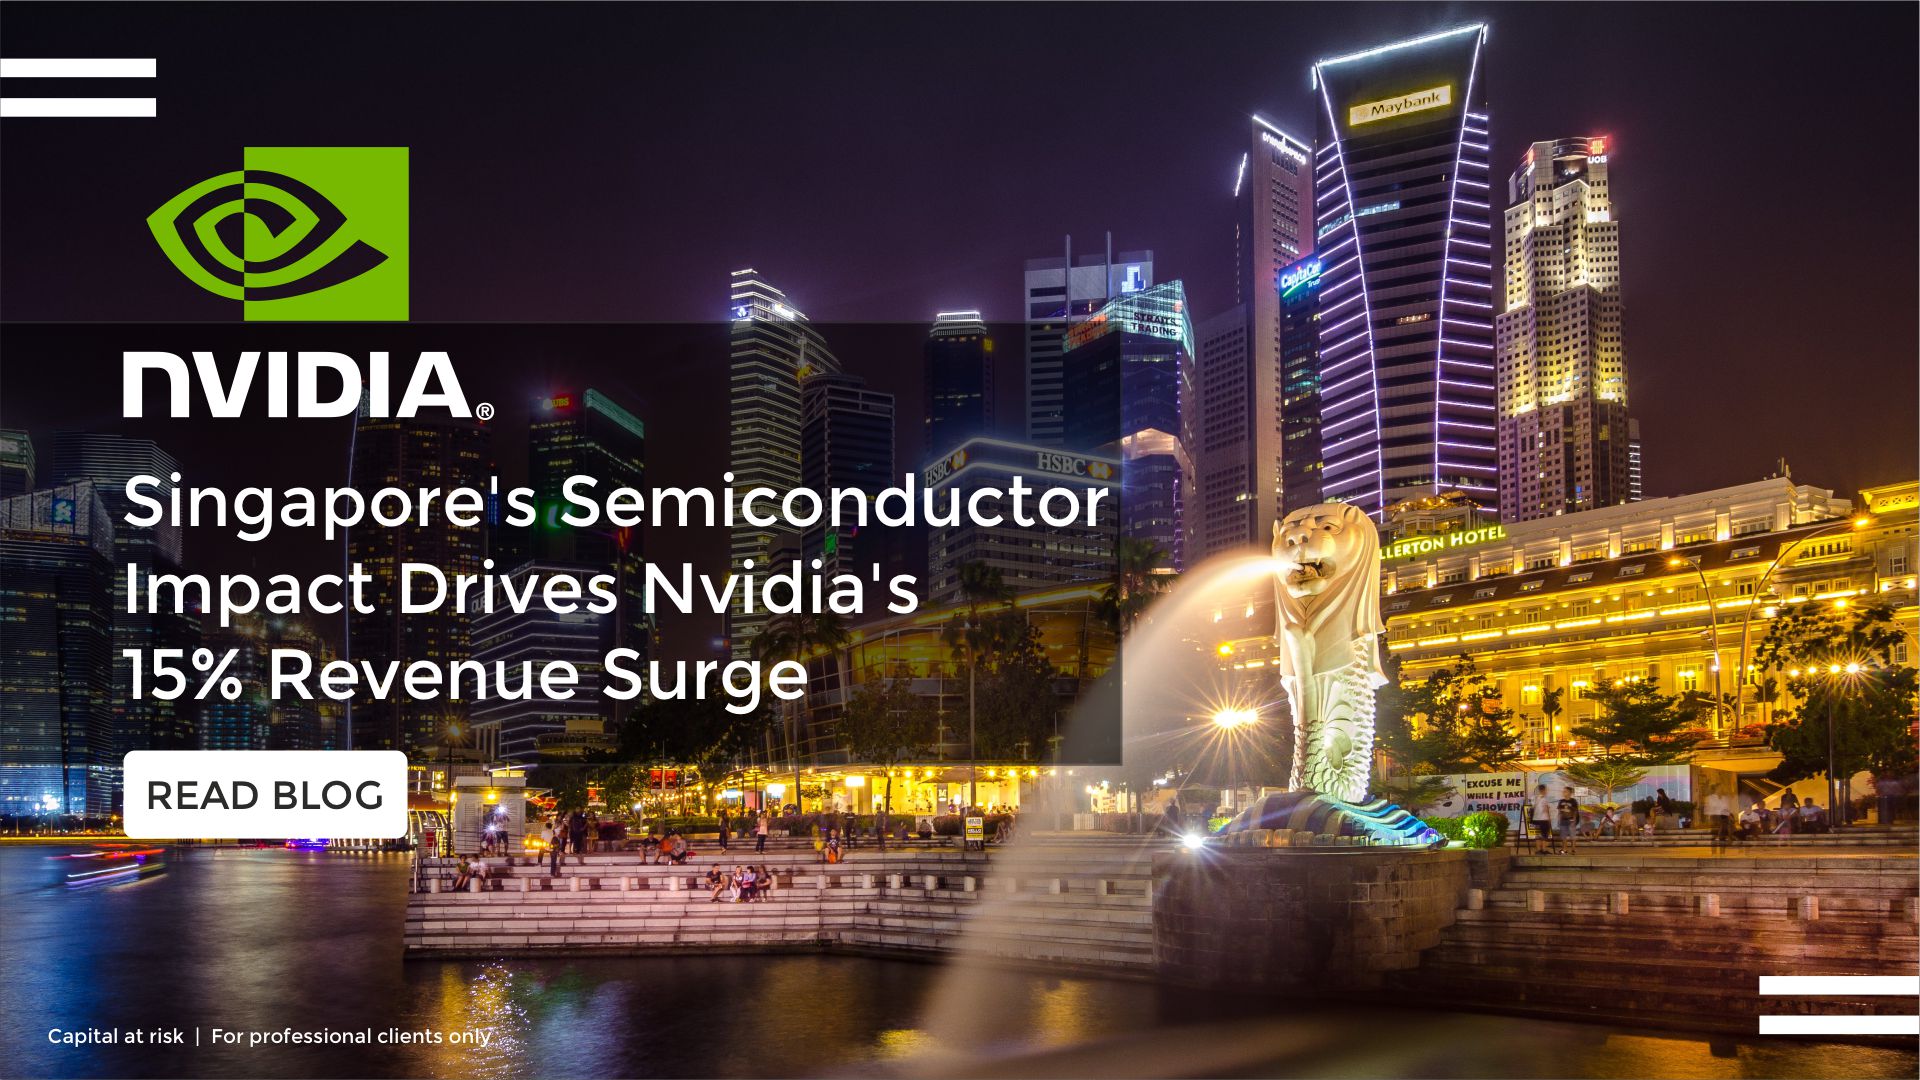 Singapore's Semiconductor Impact Drives Nvidia's 15% Revenue Surge